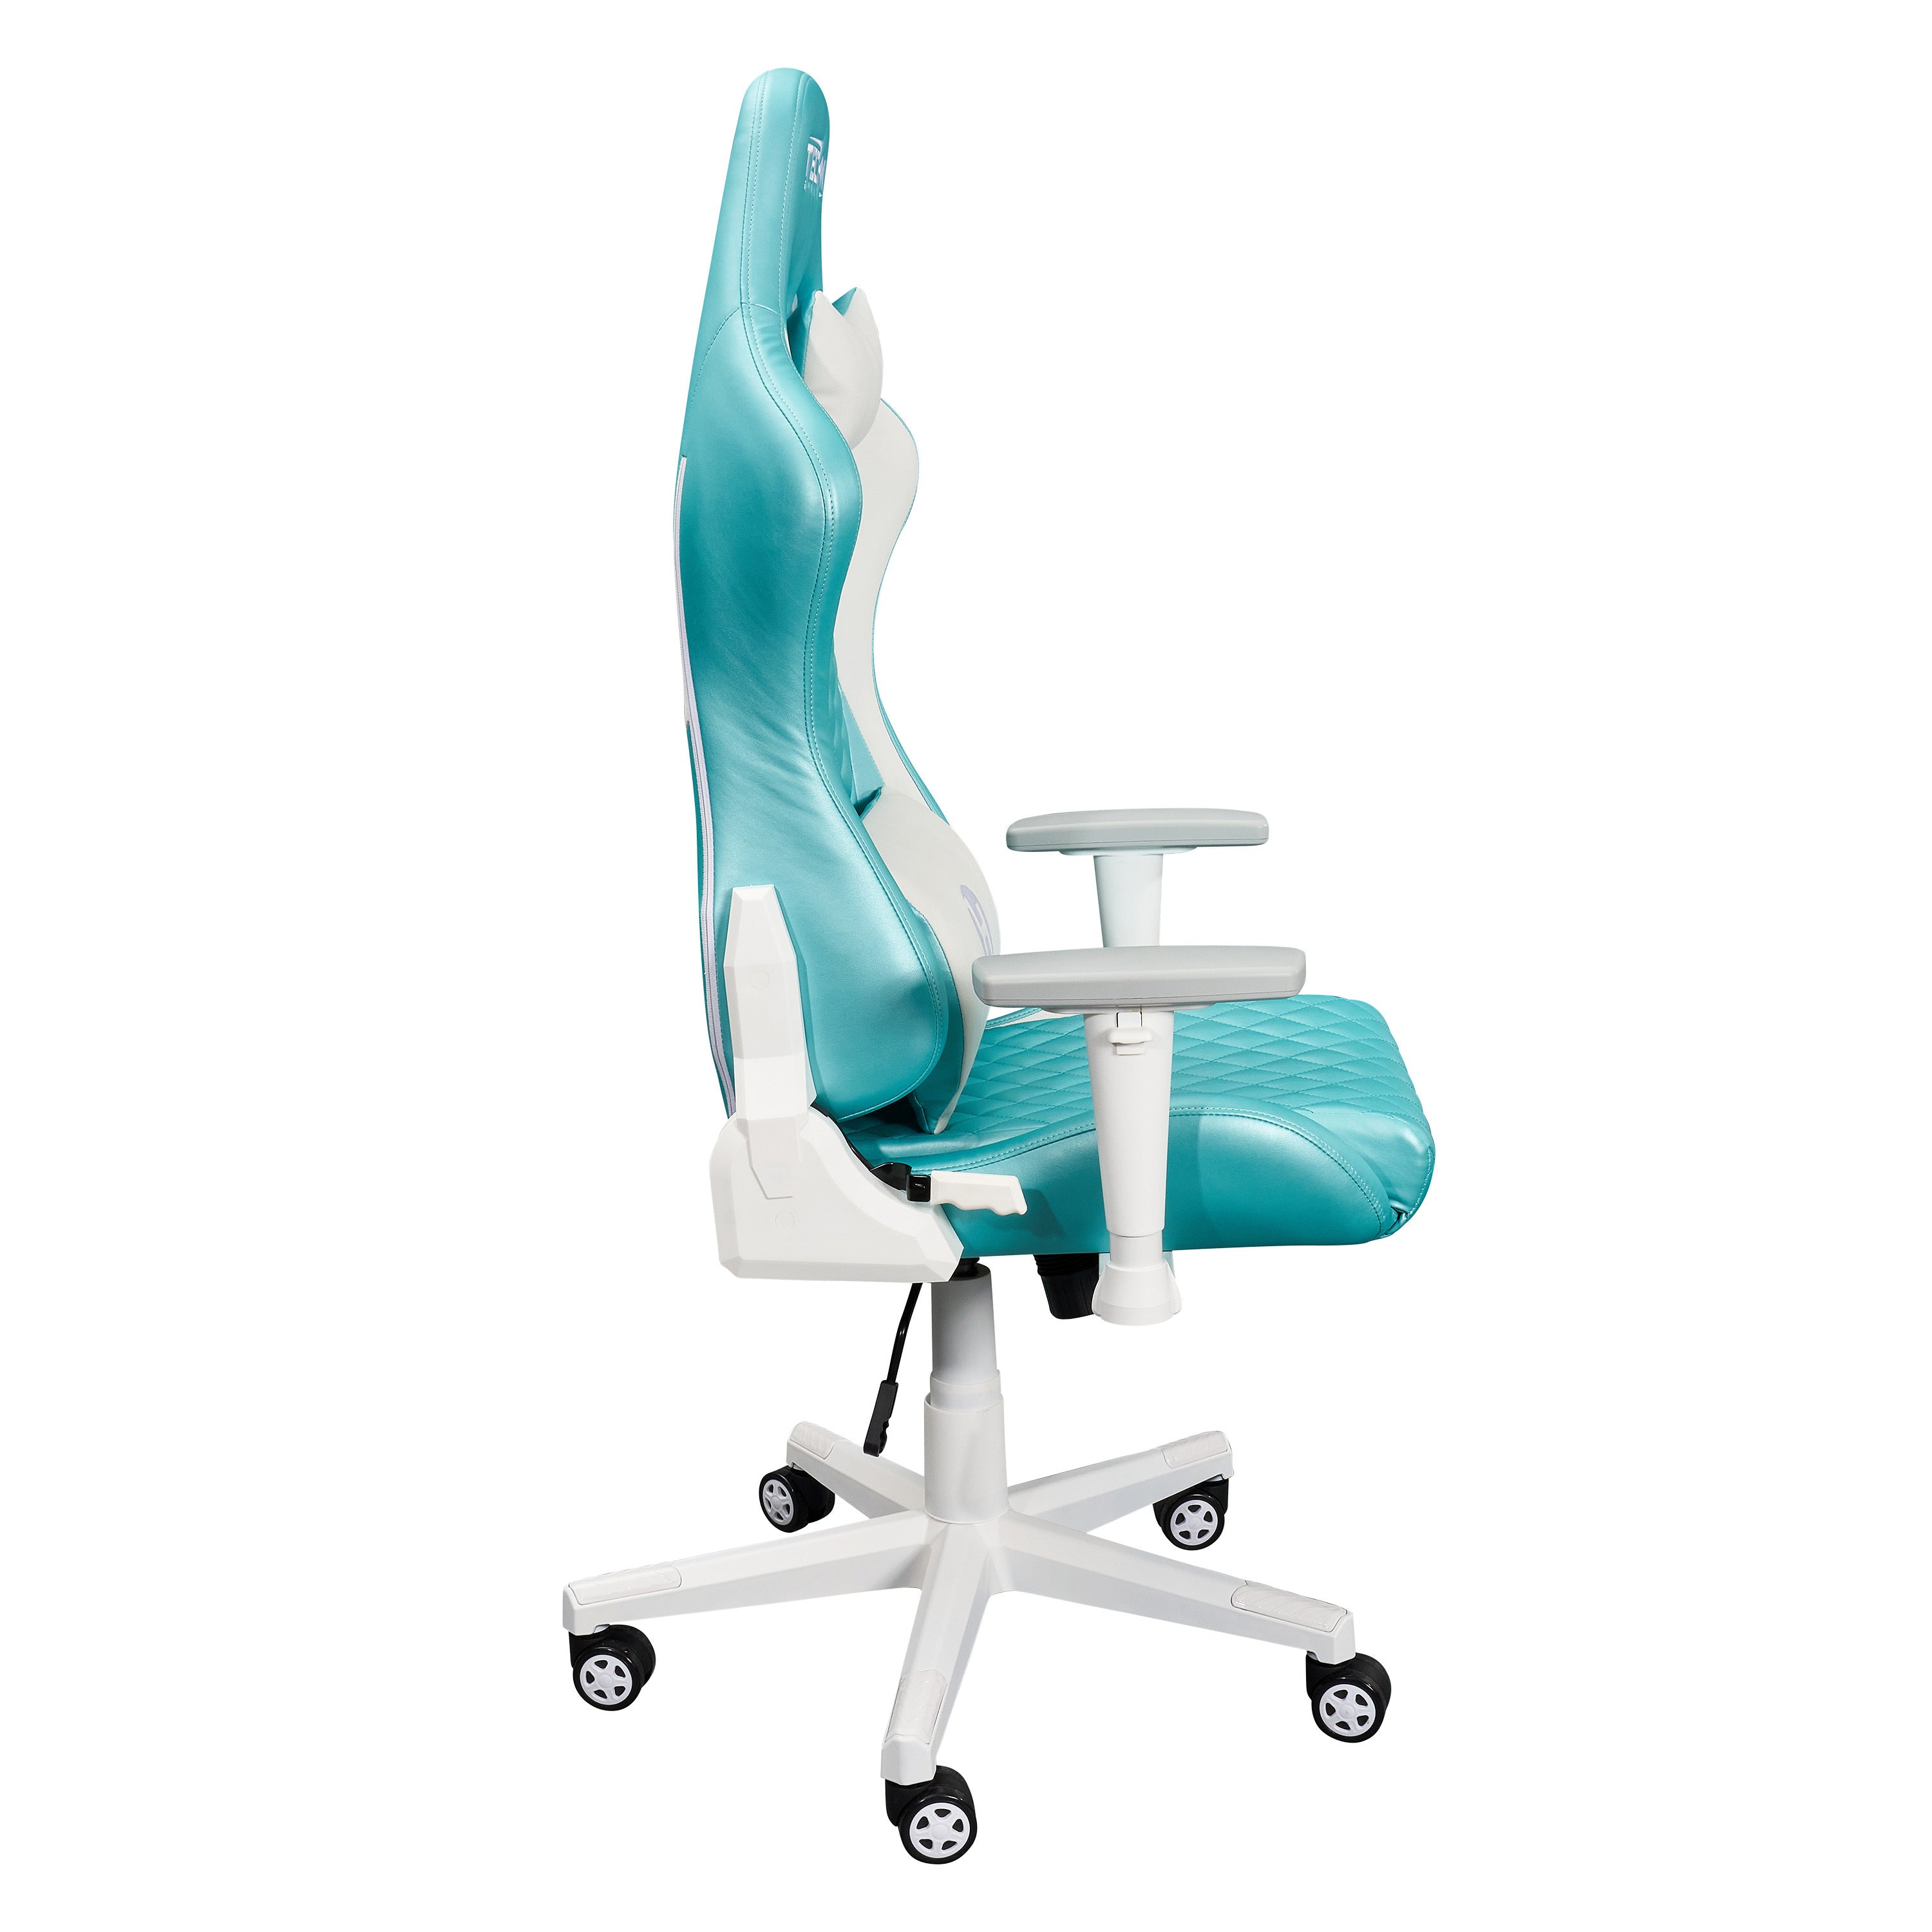 Techni Sport High Back Ergonomic Gaming Chair (White)